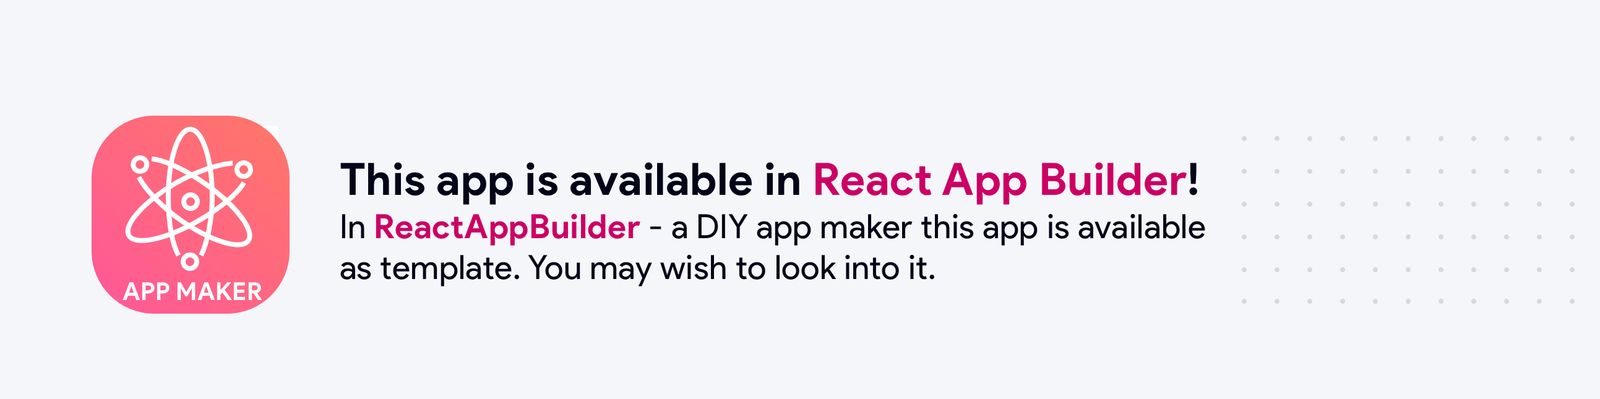 News App - React Native Expo app - 4